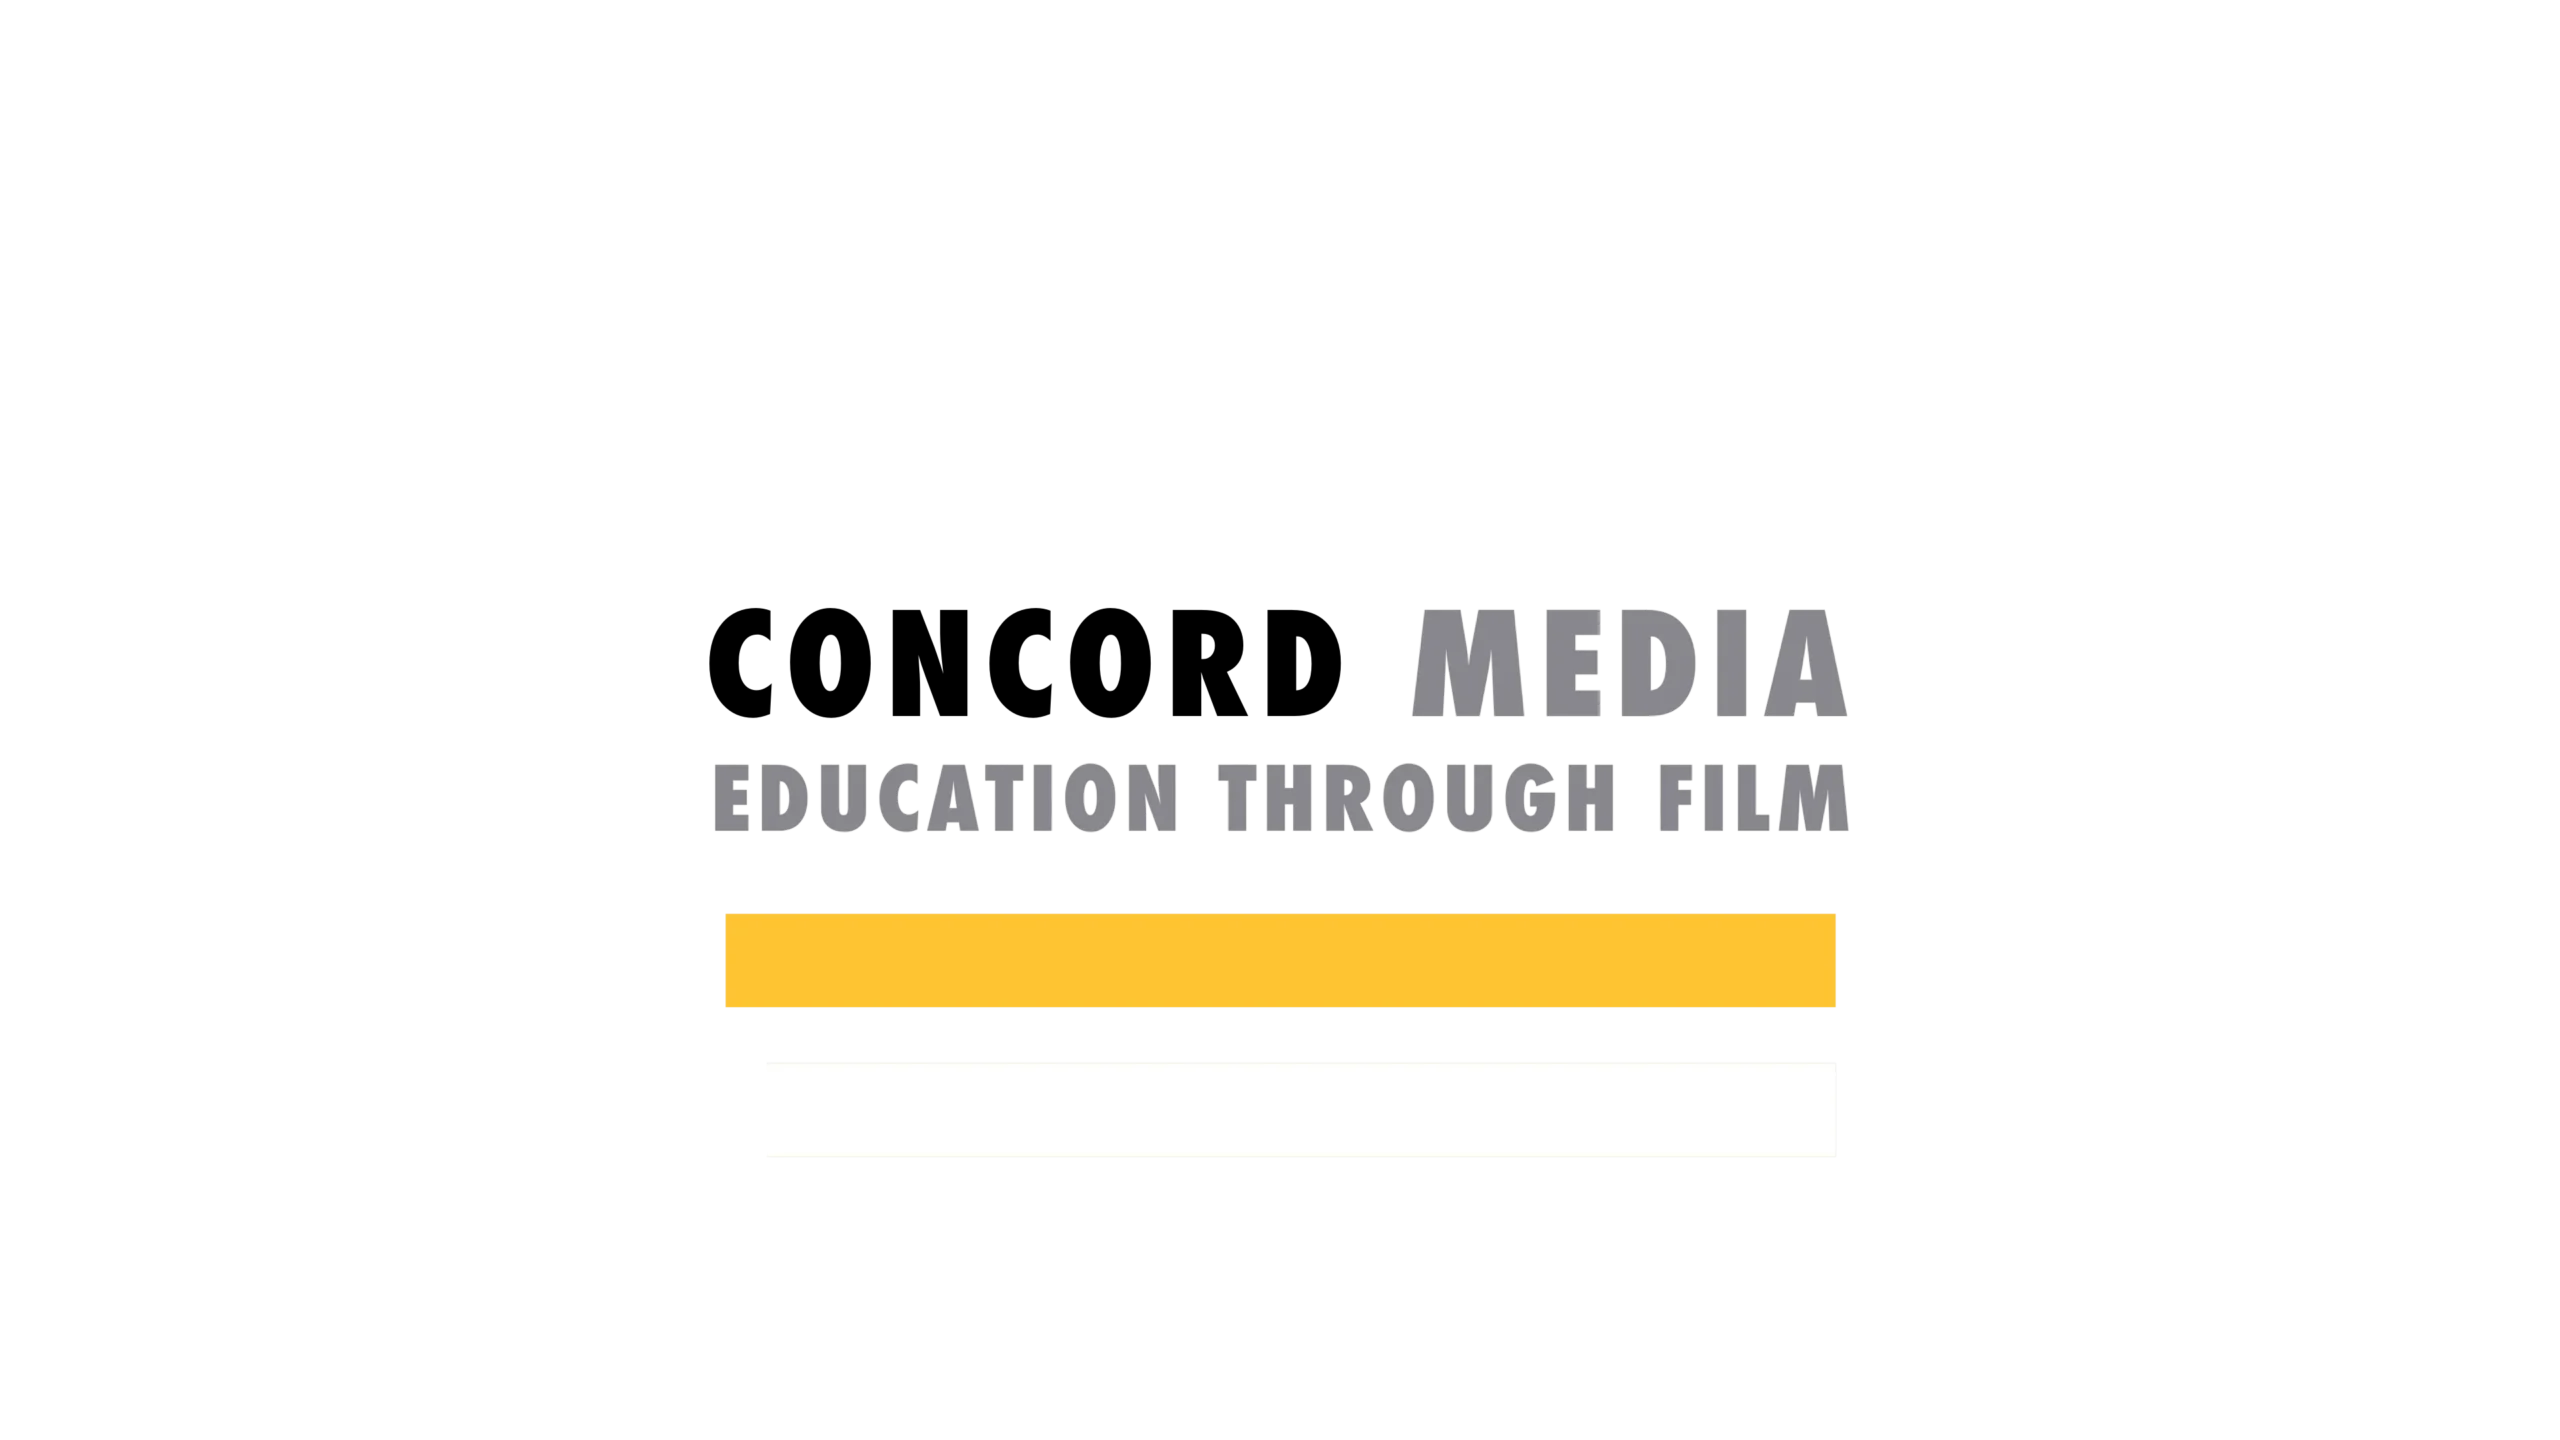 "Concord's Media Education through Film logo featuring the Concord logo.